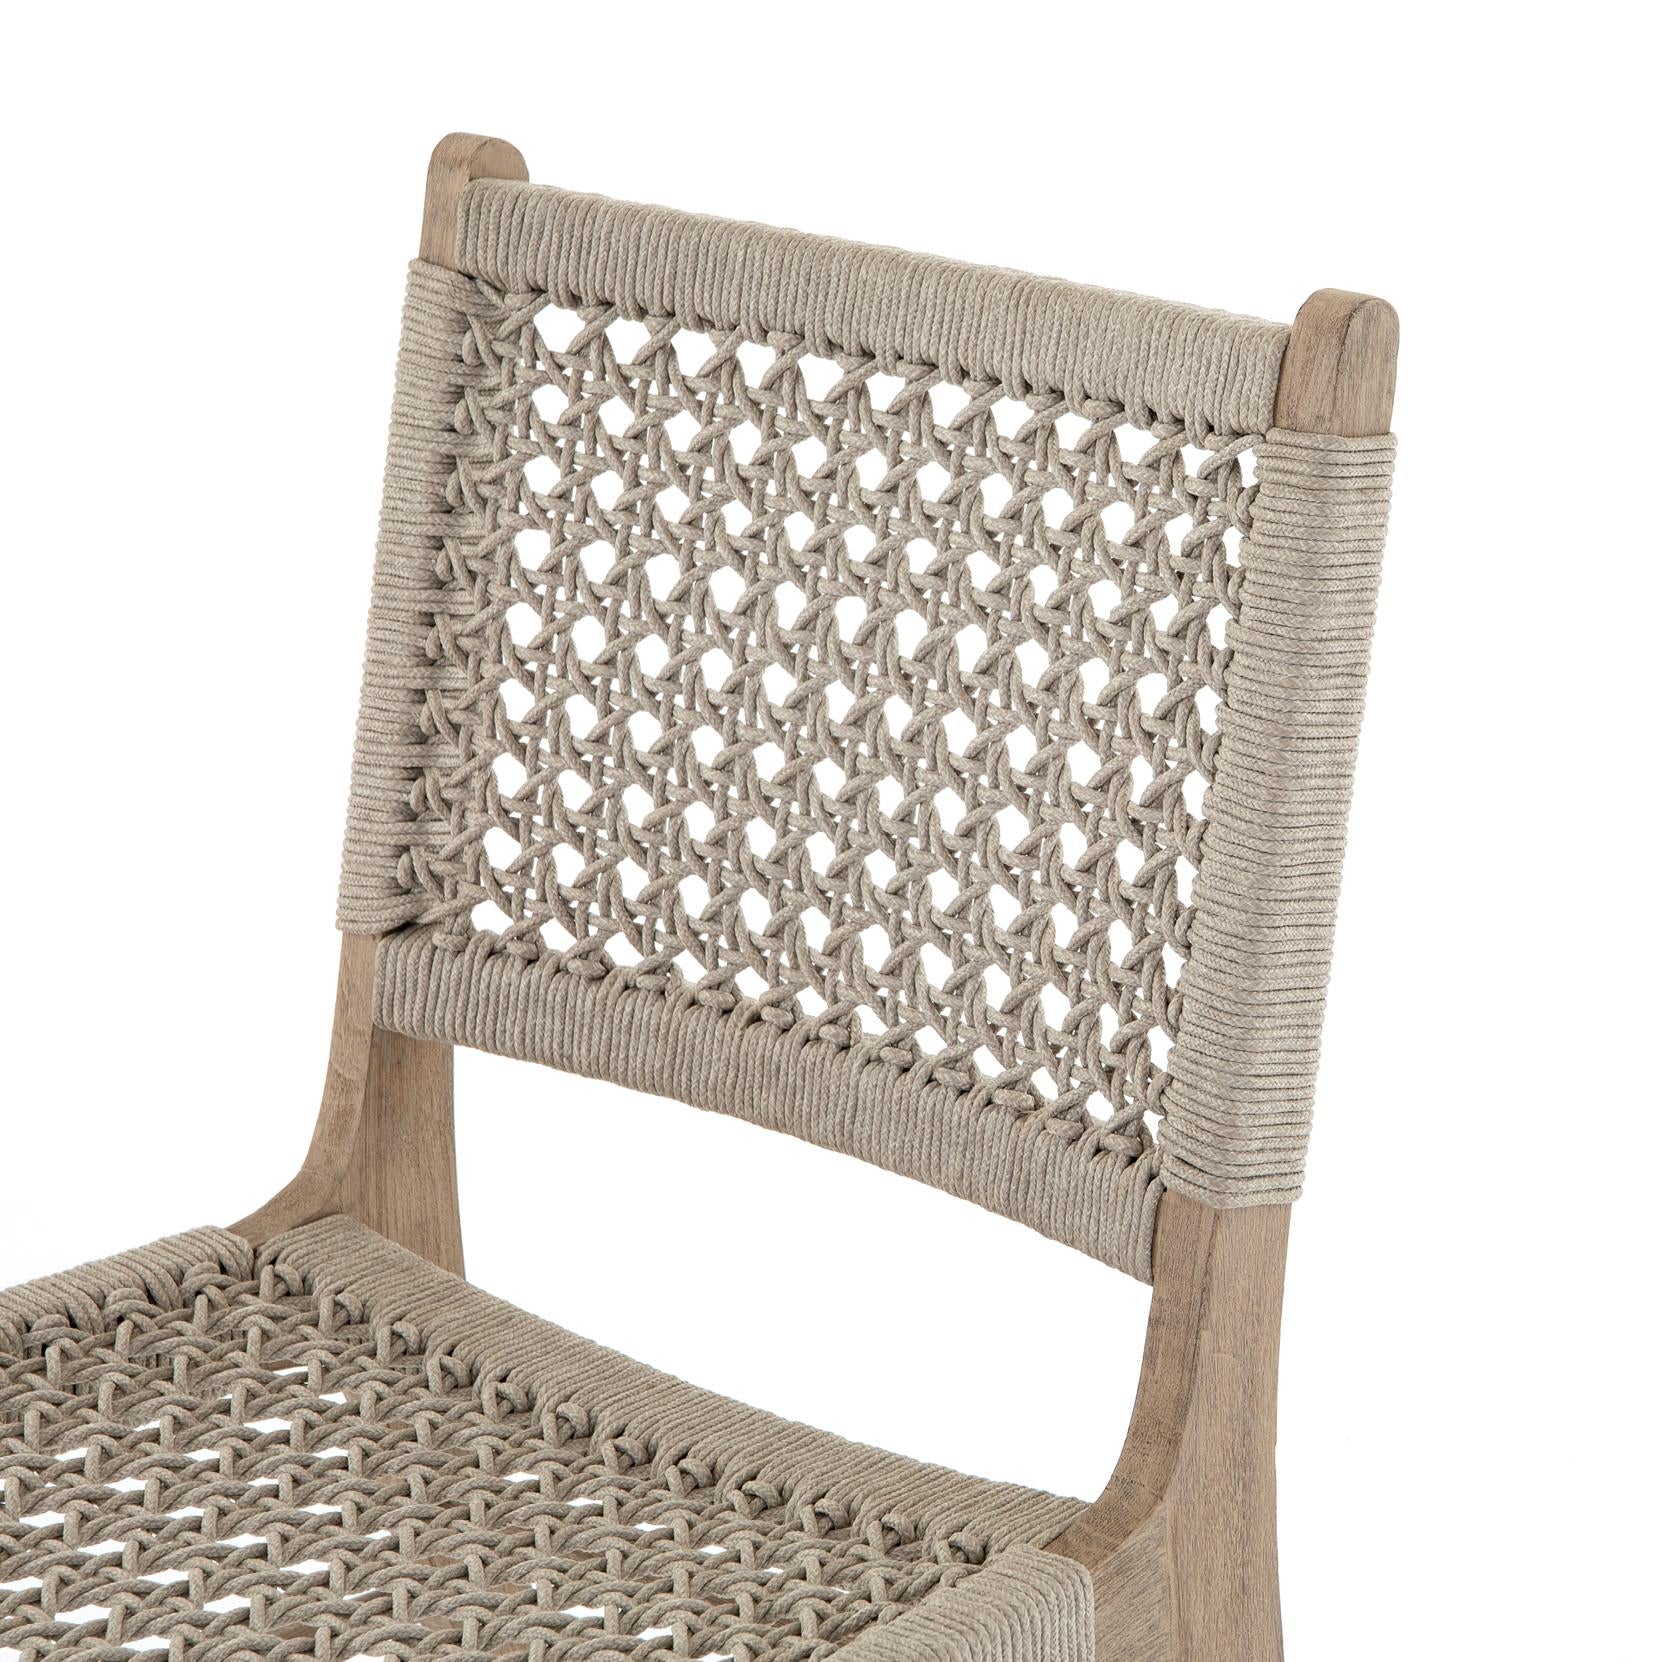 Delmar Outdoor Dining Chair - StyleMeGHD - Modern Outdoor Furniture